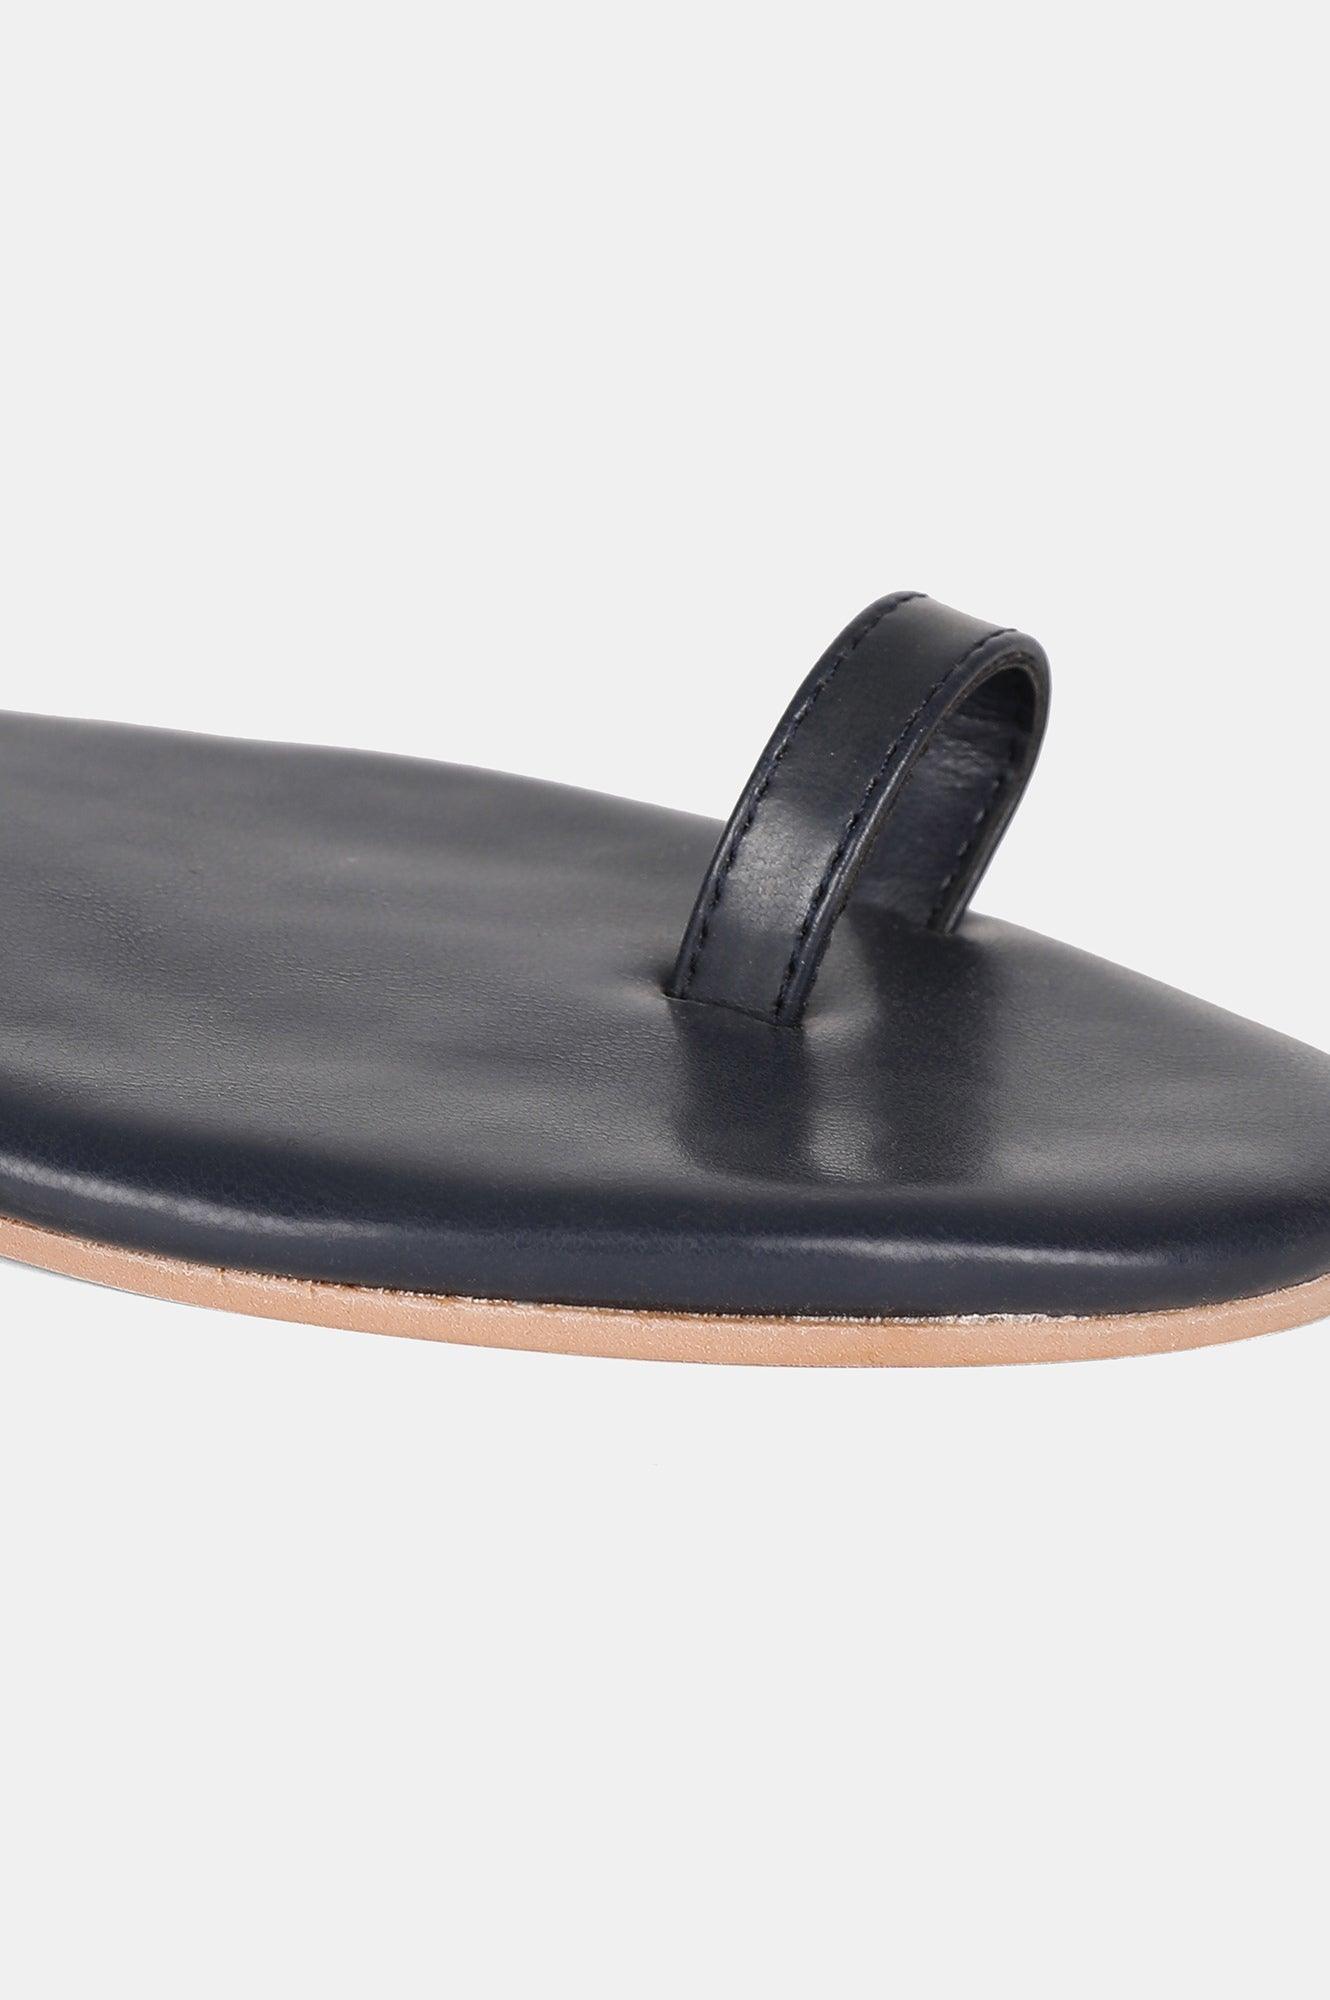 Navy Almond Toe Woven Design Flat - Wmorgan - wforwoman